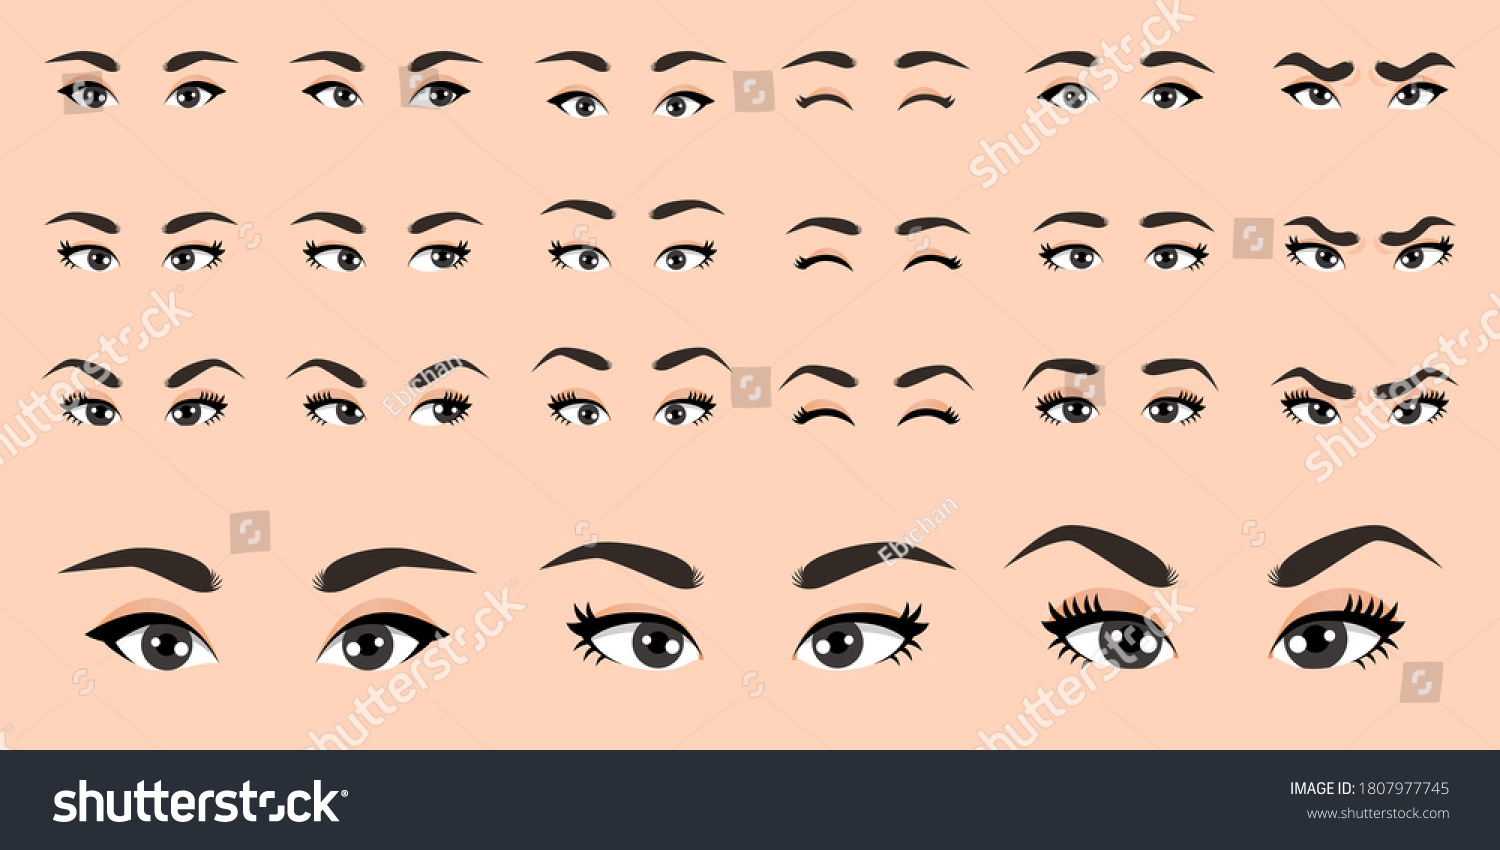 Cartoon female eyes collection vector illustration #1807977745